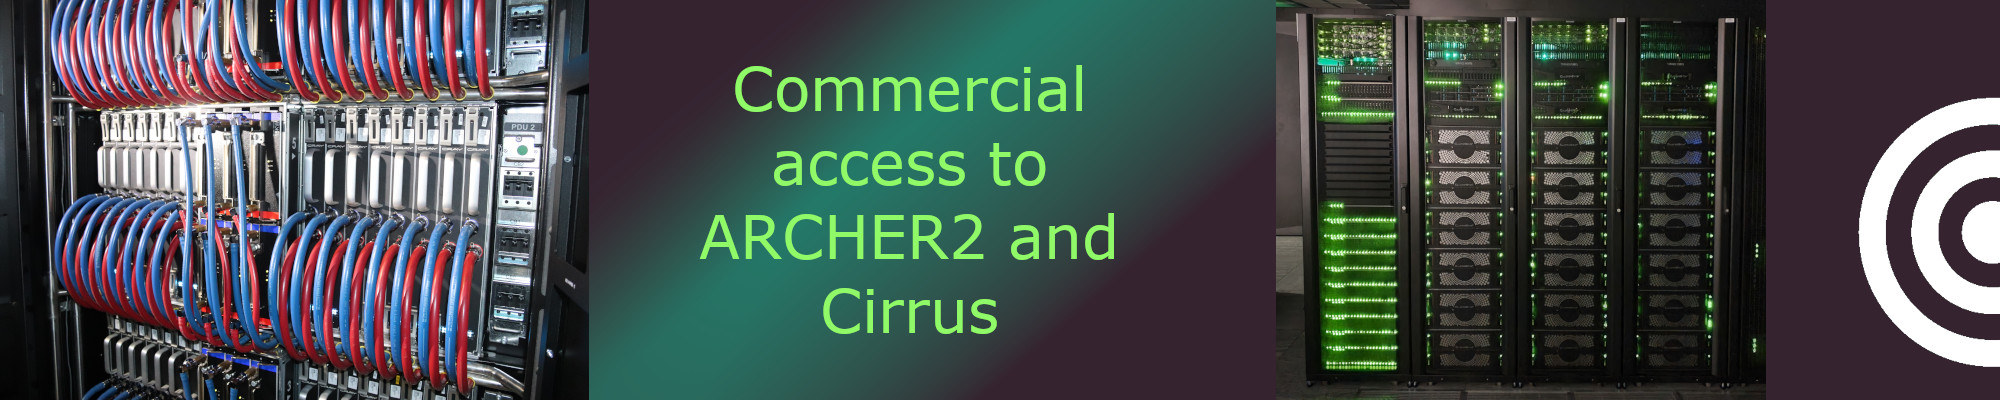 Commercial access ARCHER2